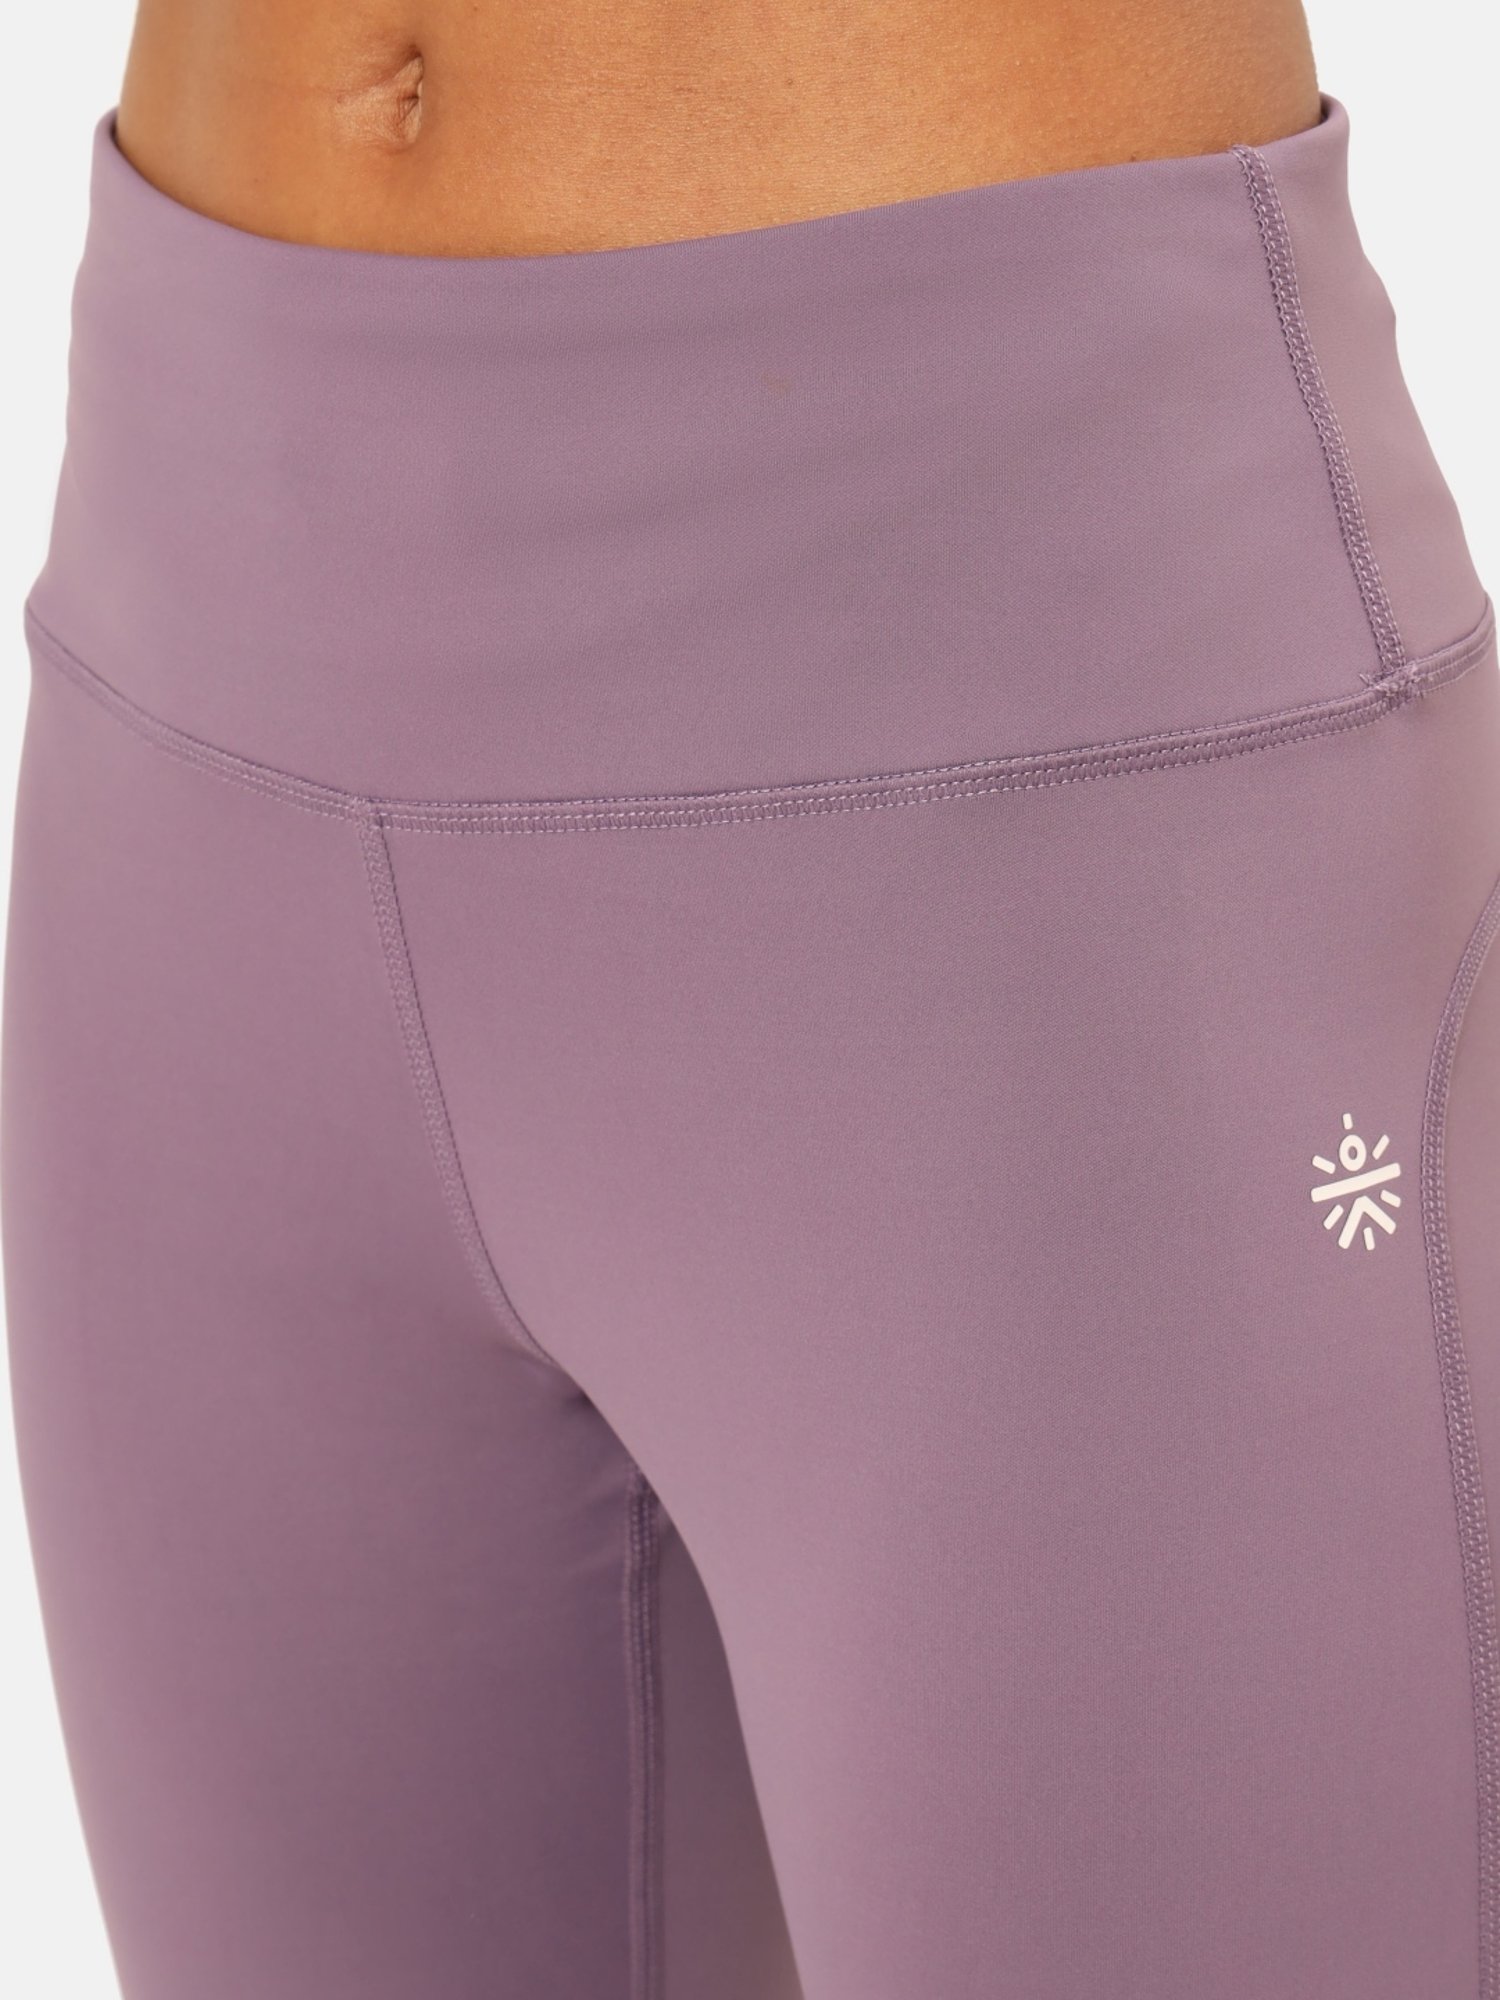 Tuff Athletics Womens Leggings Small Purple Mid Rise Stretch Nylon/Polyester